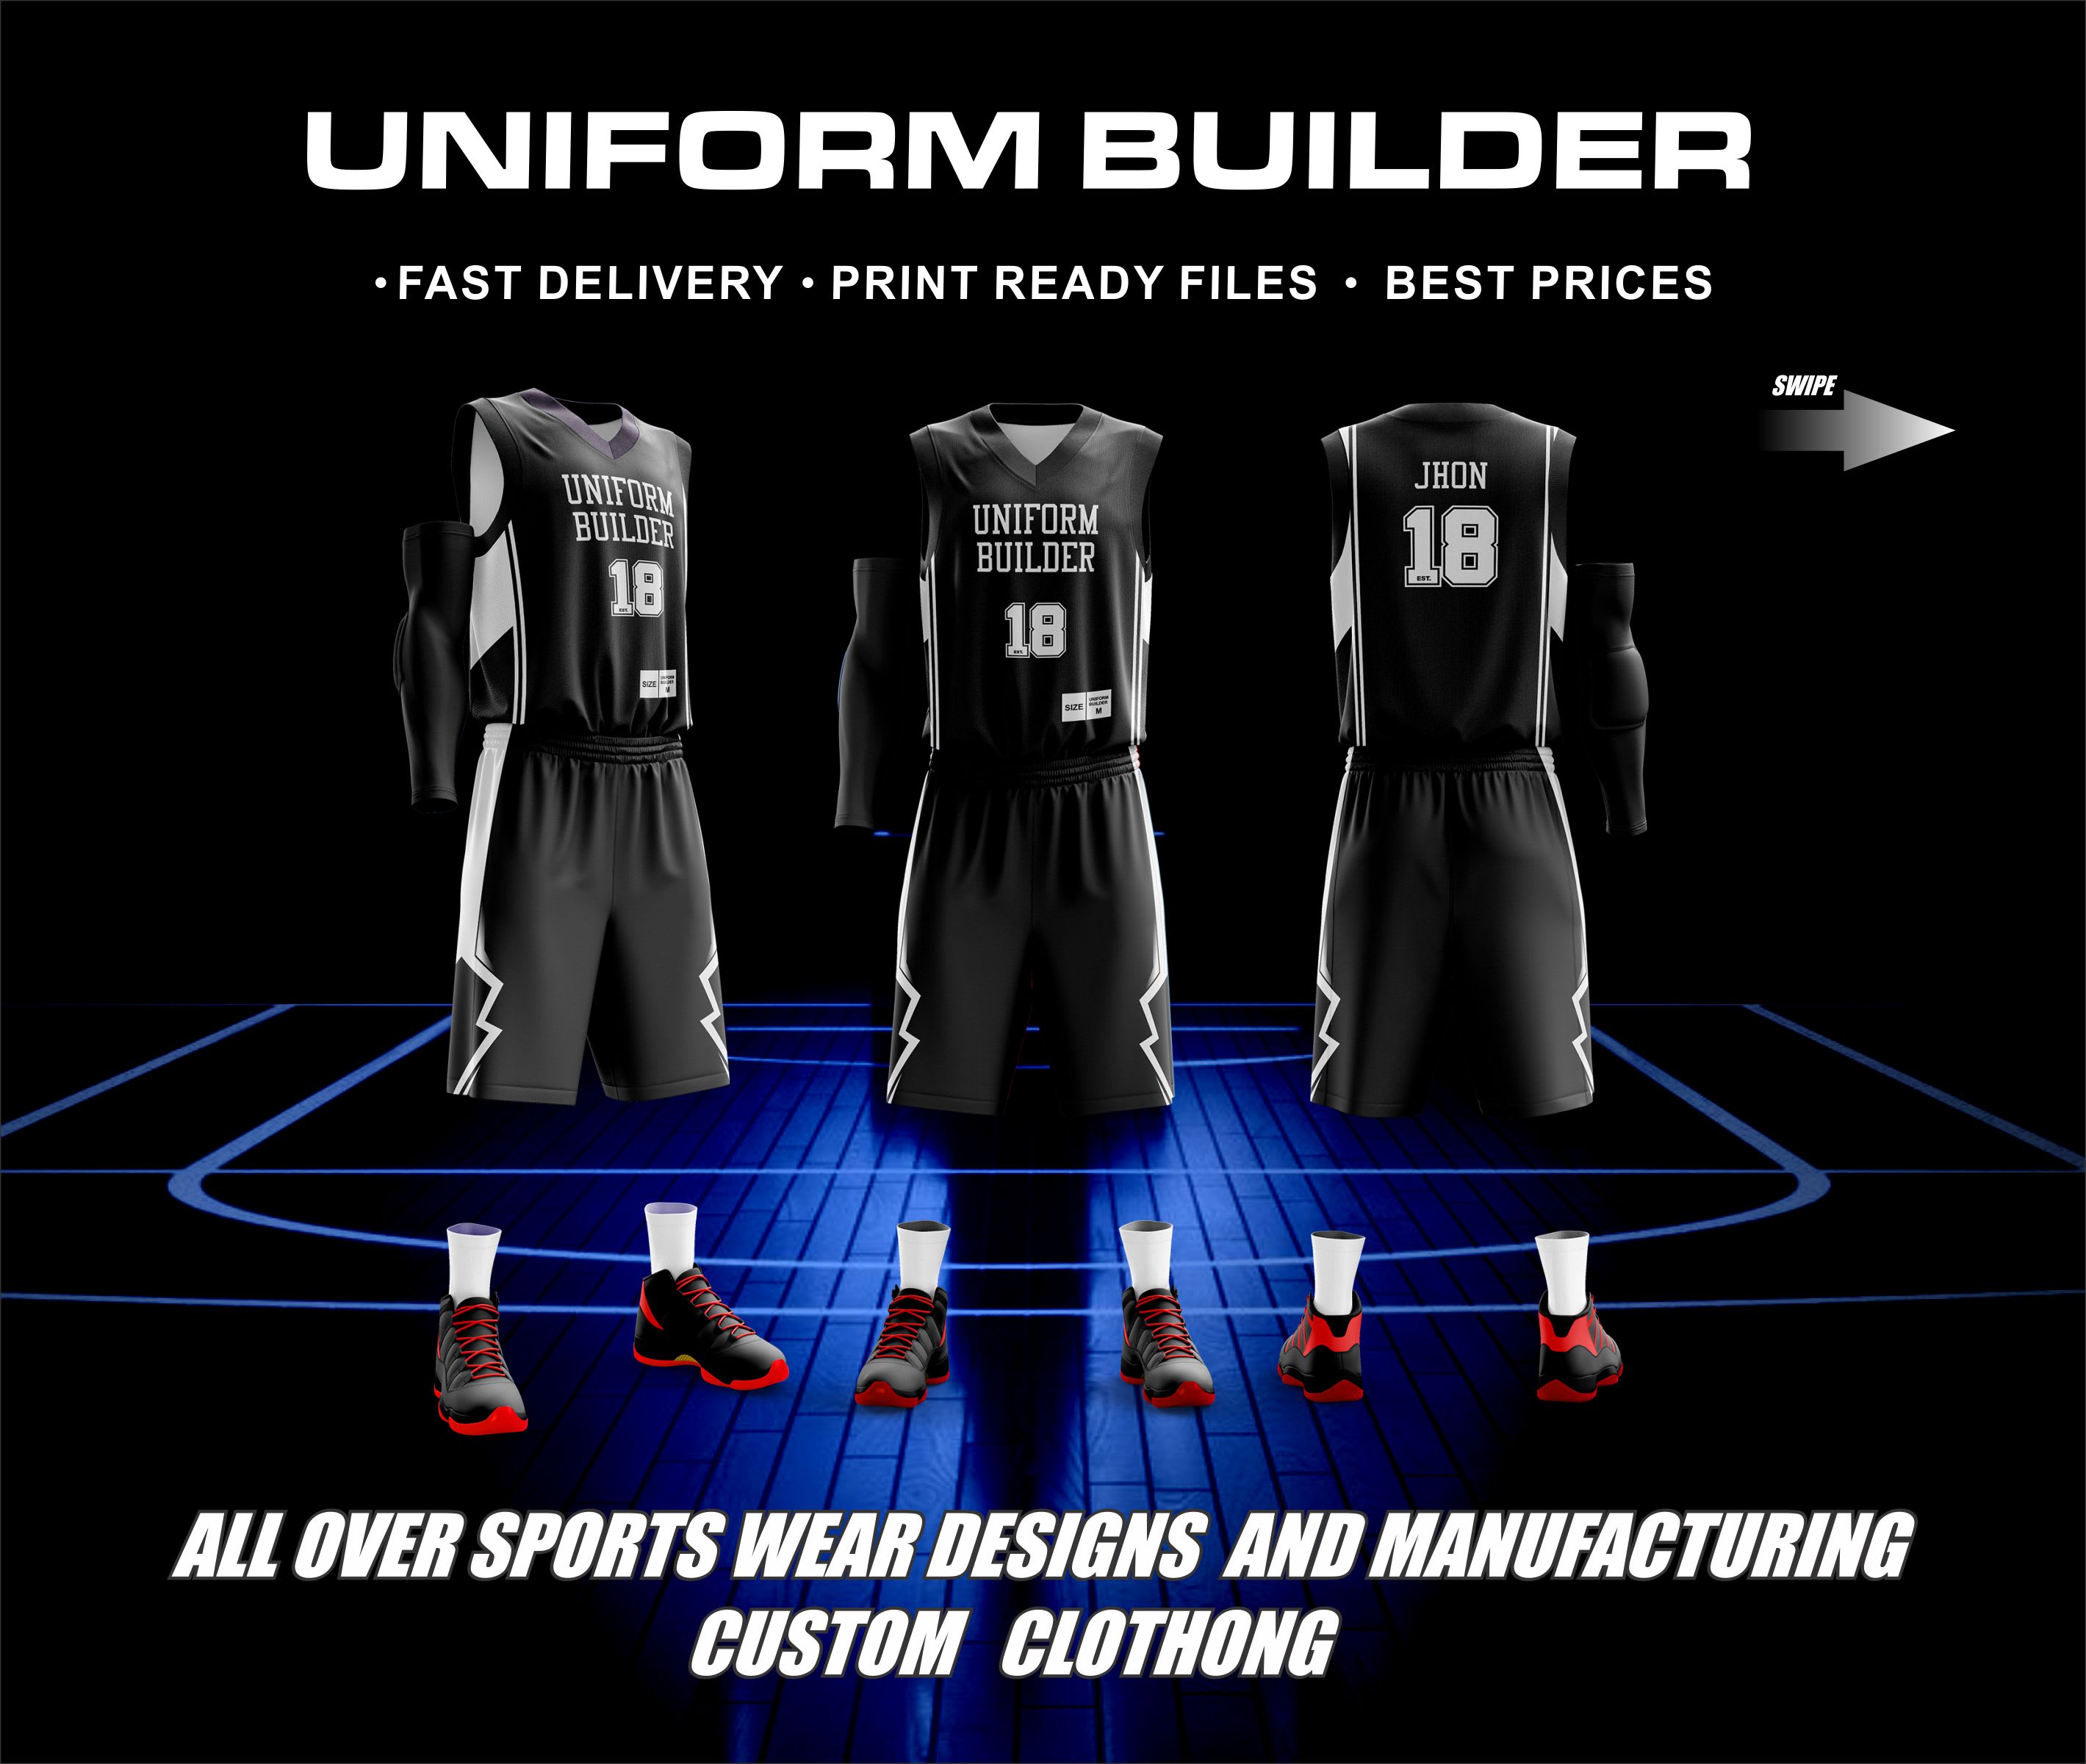 Basketball Uniforms - FAST TURNAROUND